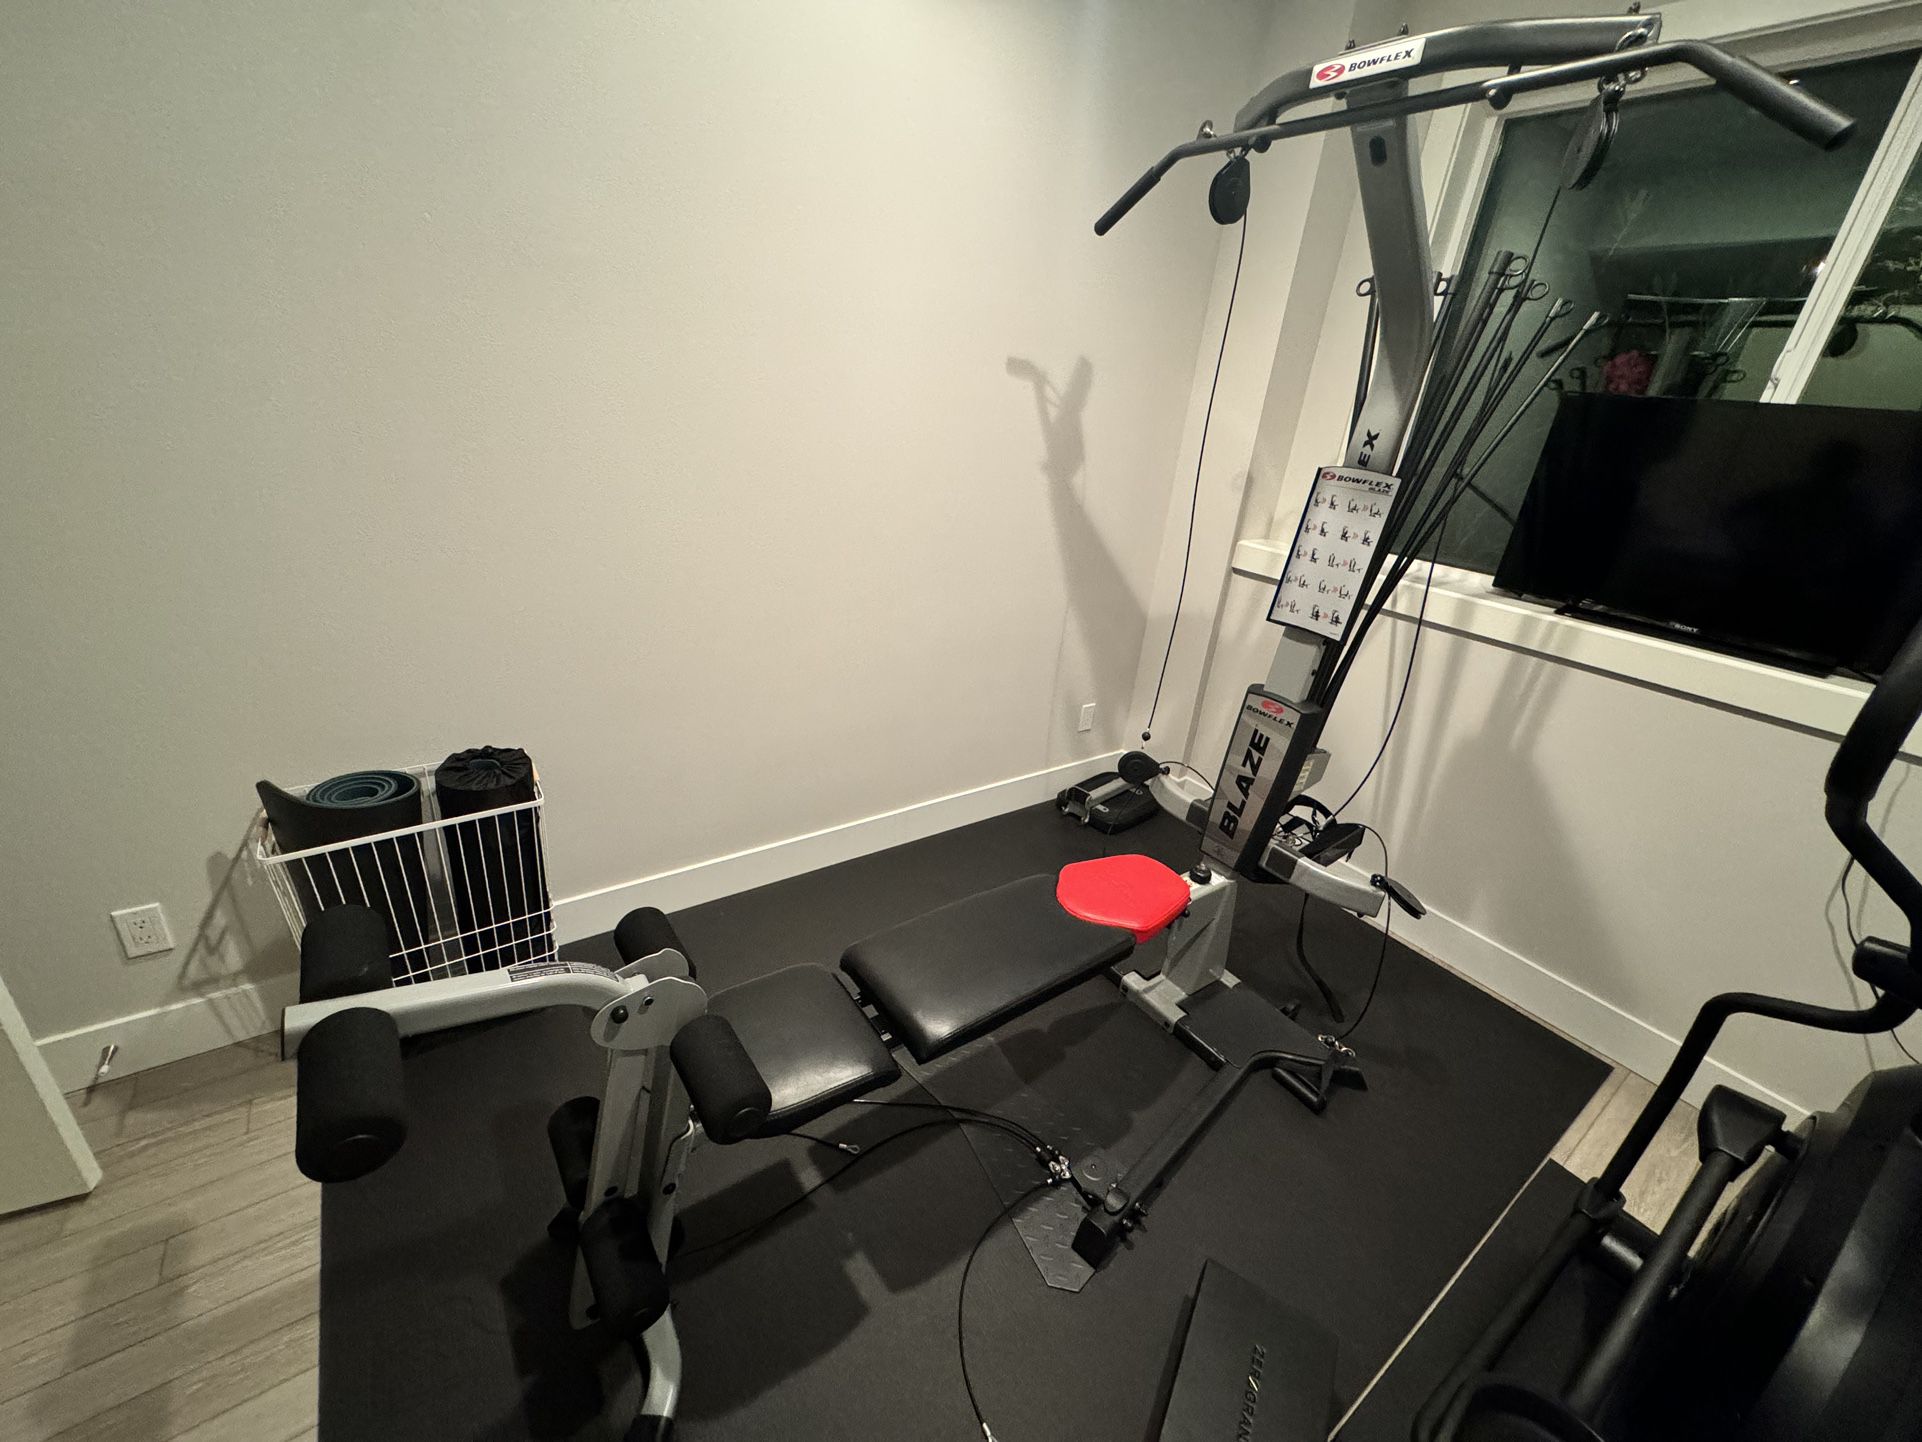 Bowflex Blaze Home Gym Workout System 